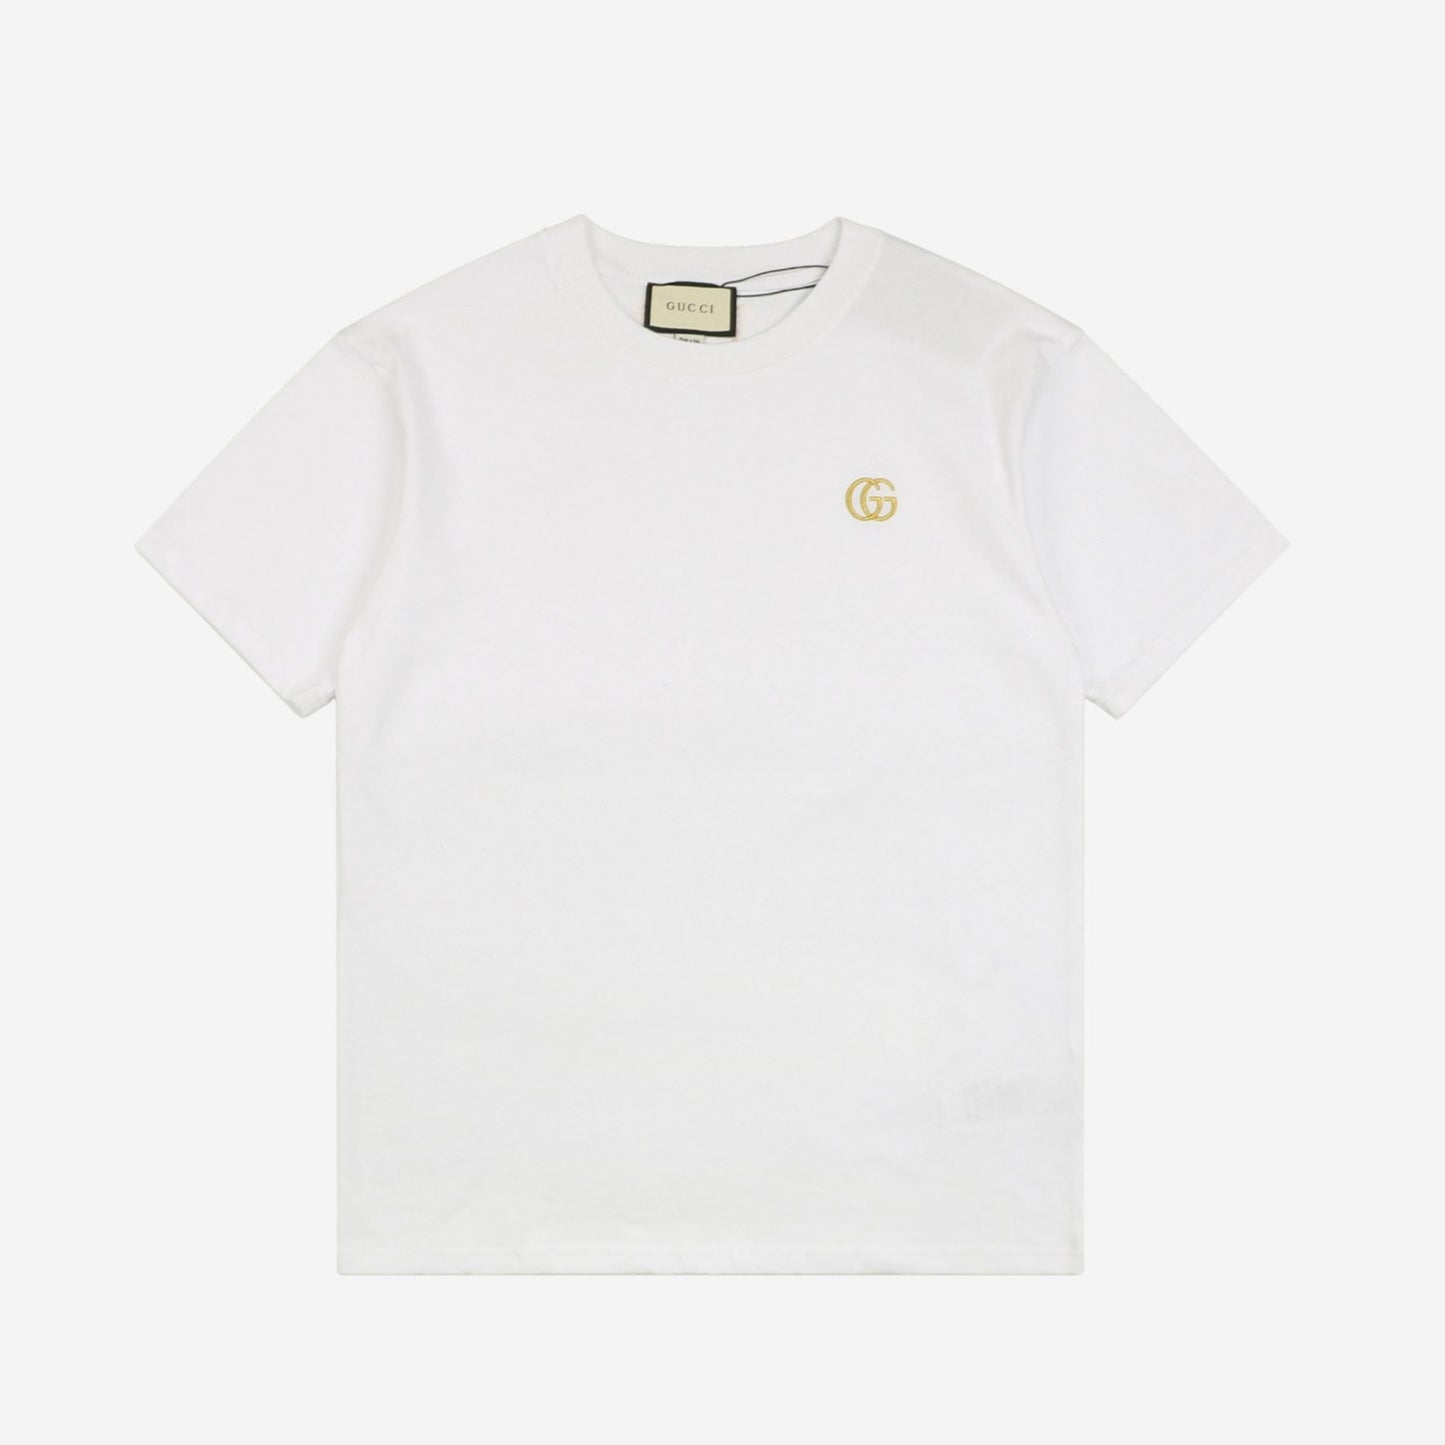 Gucc1 Small Gold T-Shirt White